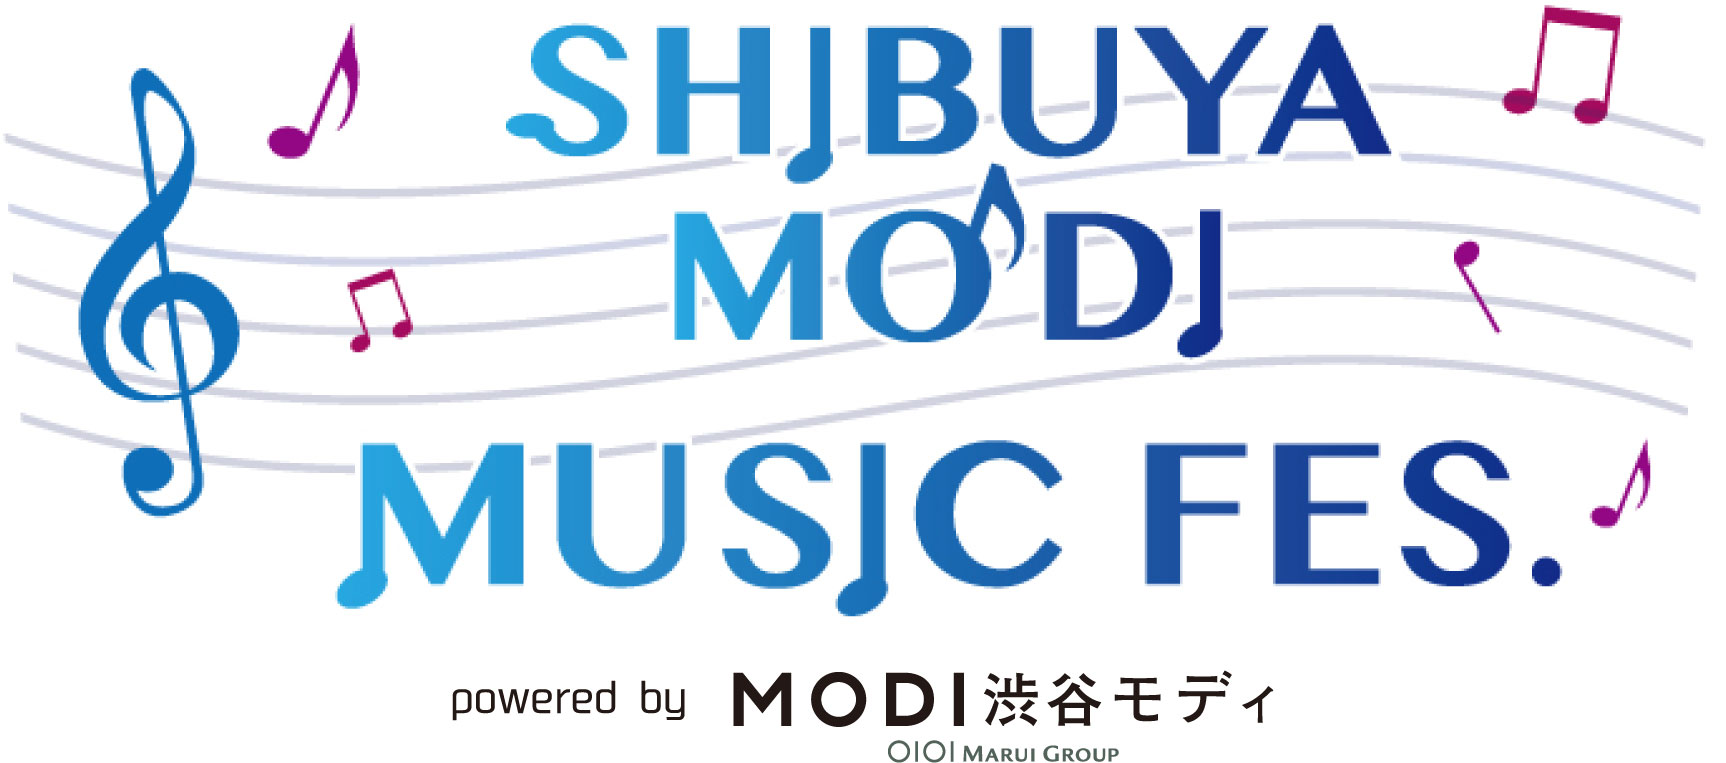 SHIBUYA MODI MUSIC FES.